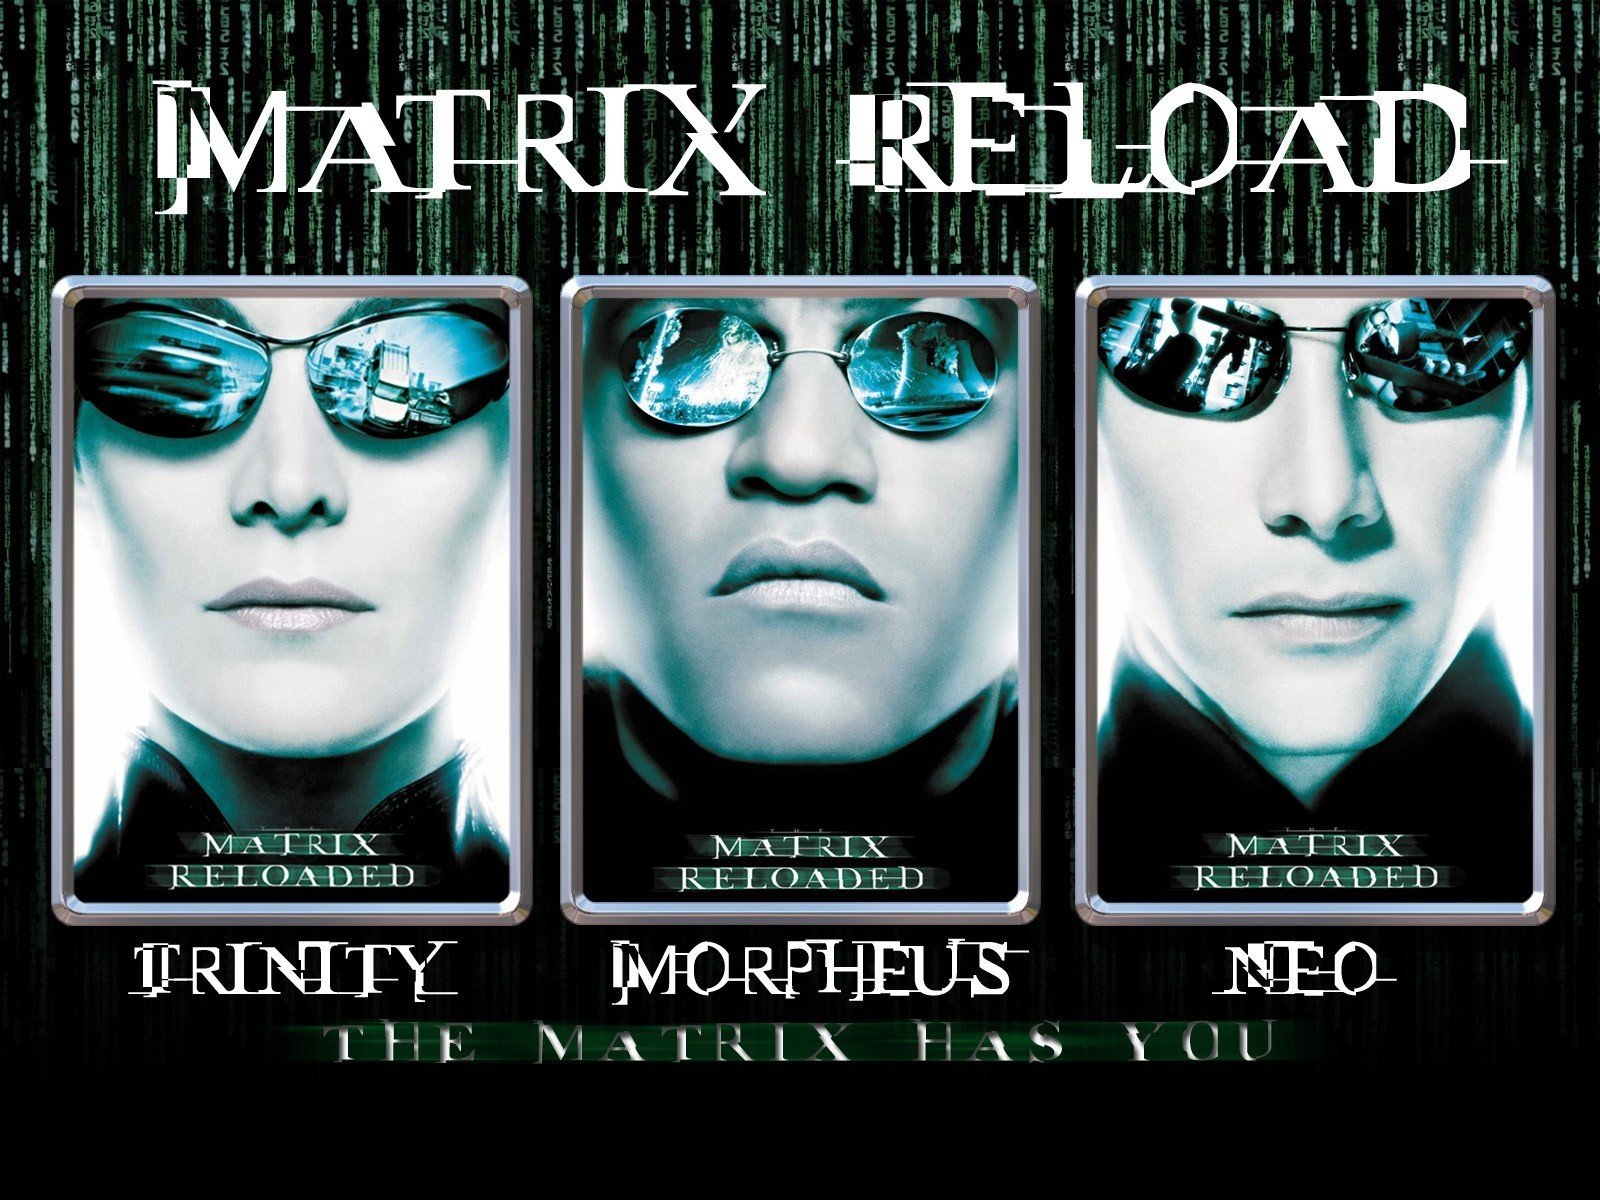 The Matrix Reloaded wallpaper HD for desktop background